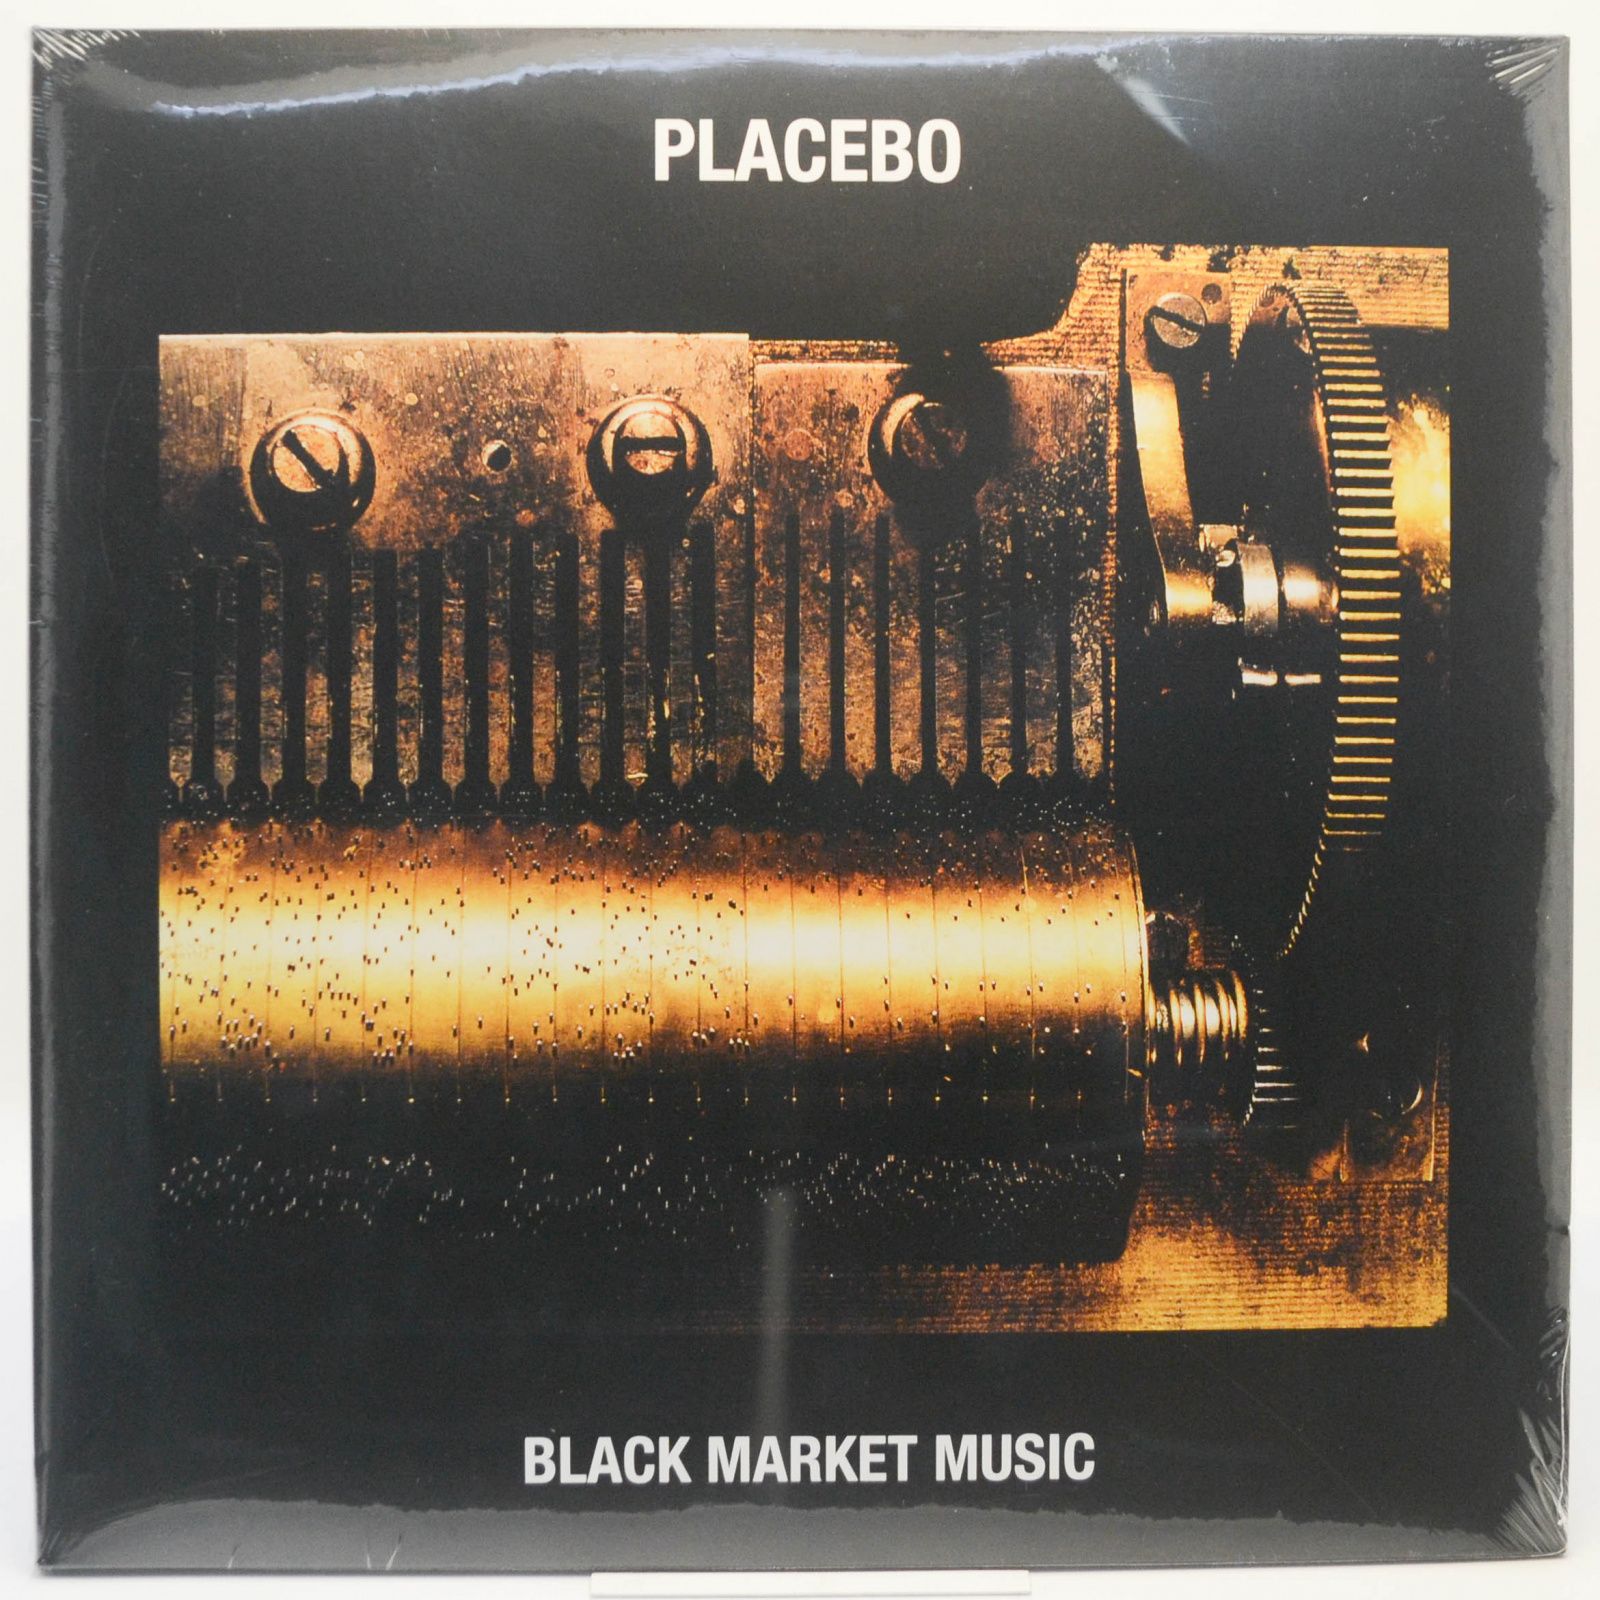 Placebo — Black Market Music, 2000